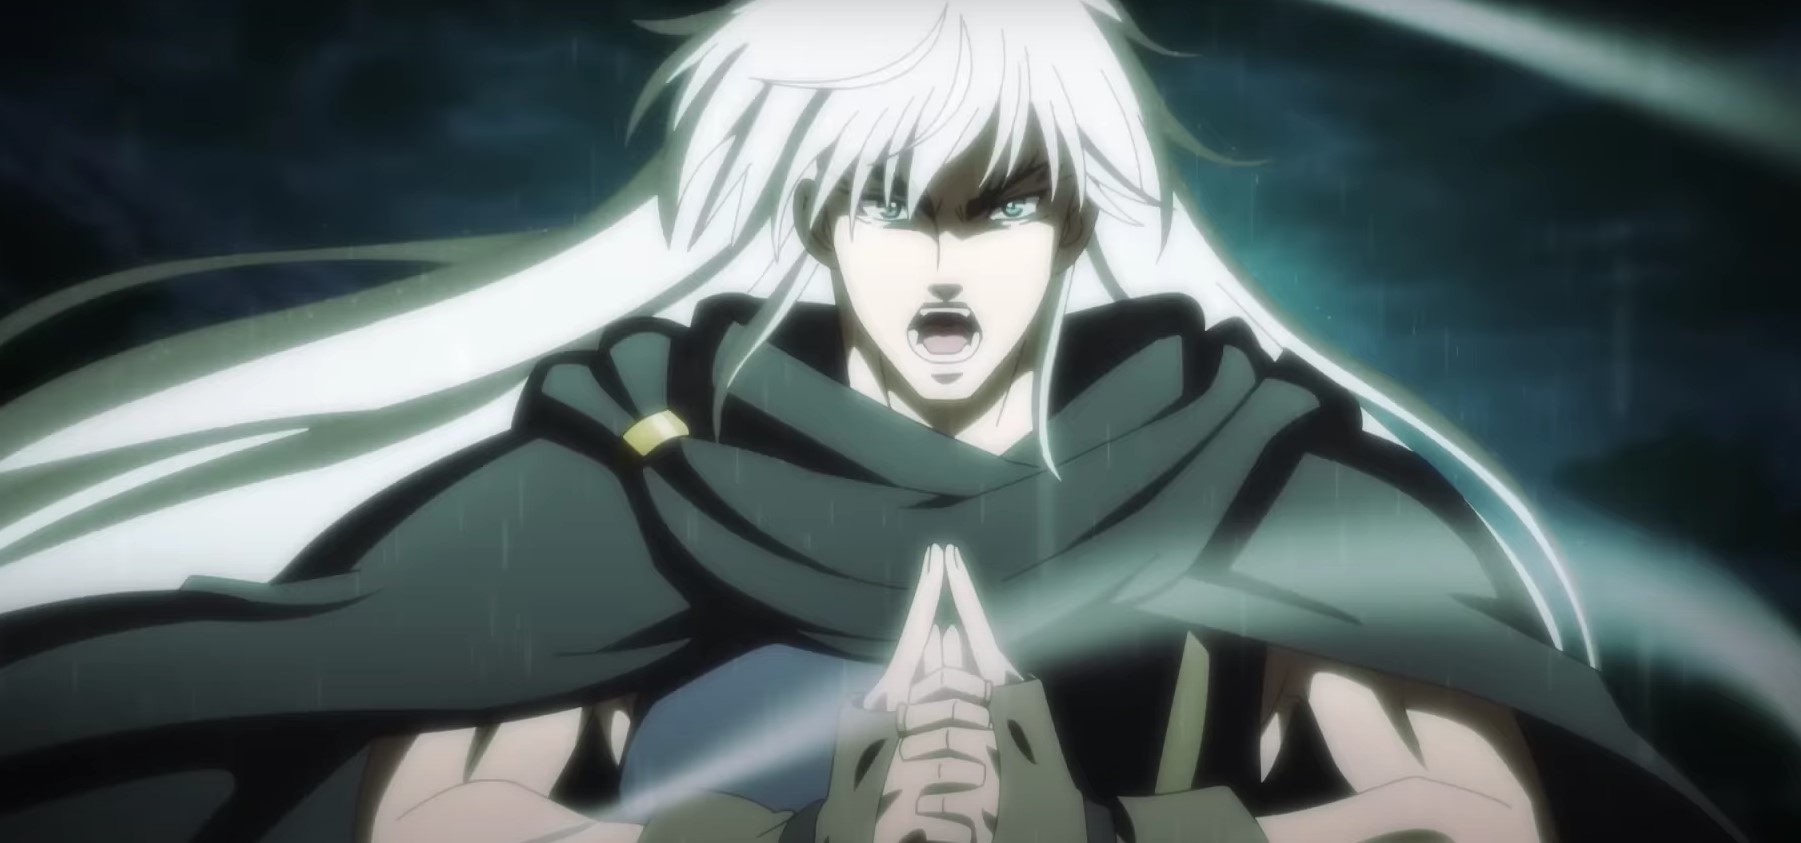 Bastard Heavy Metal Dark Fantasy anime season 2 episode 1 release date  total episodes voice cast  The SportsGrail